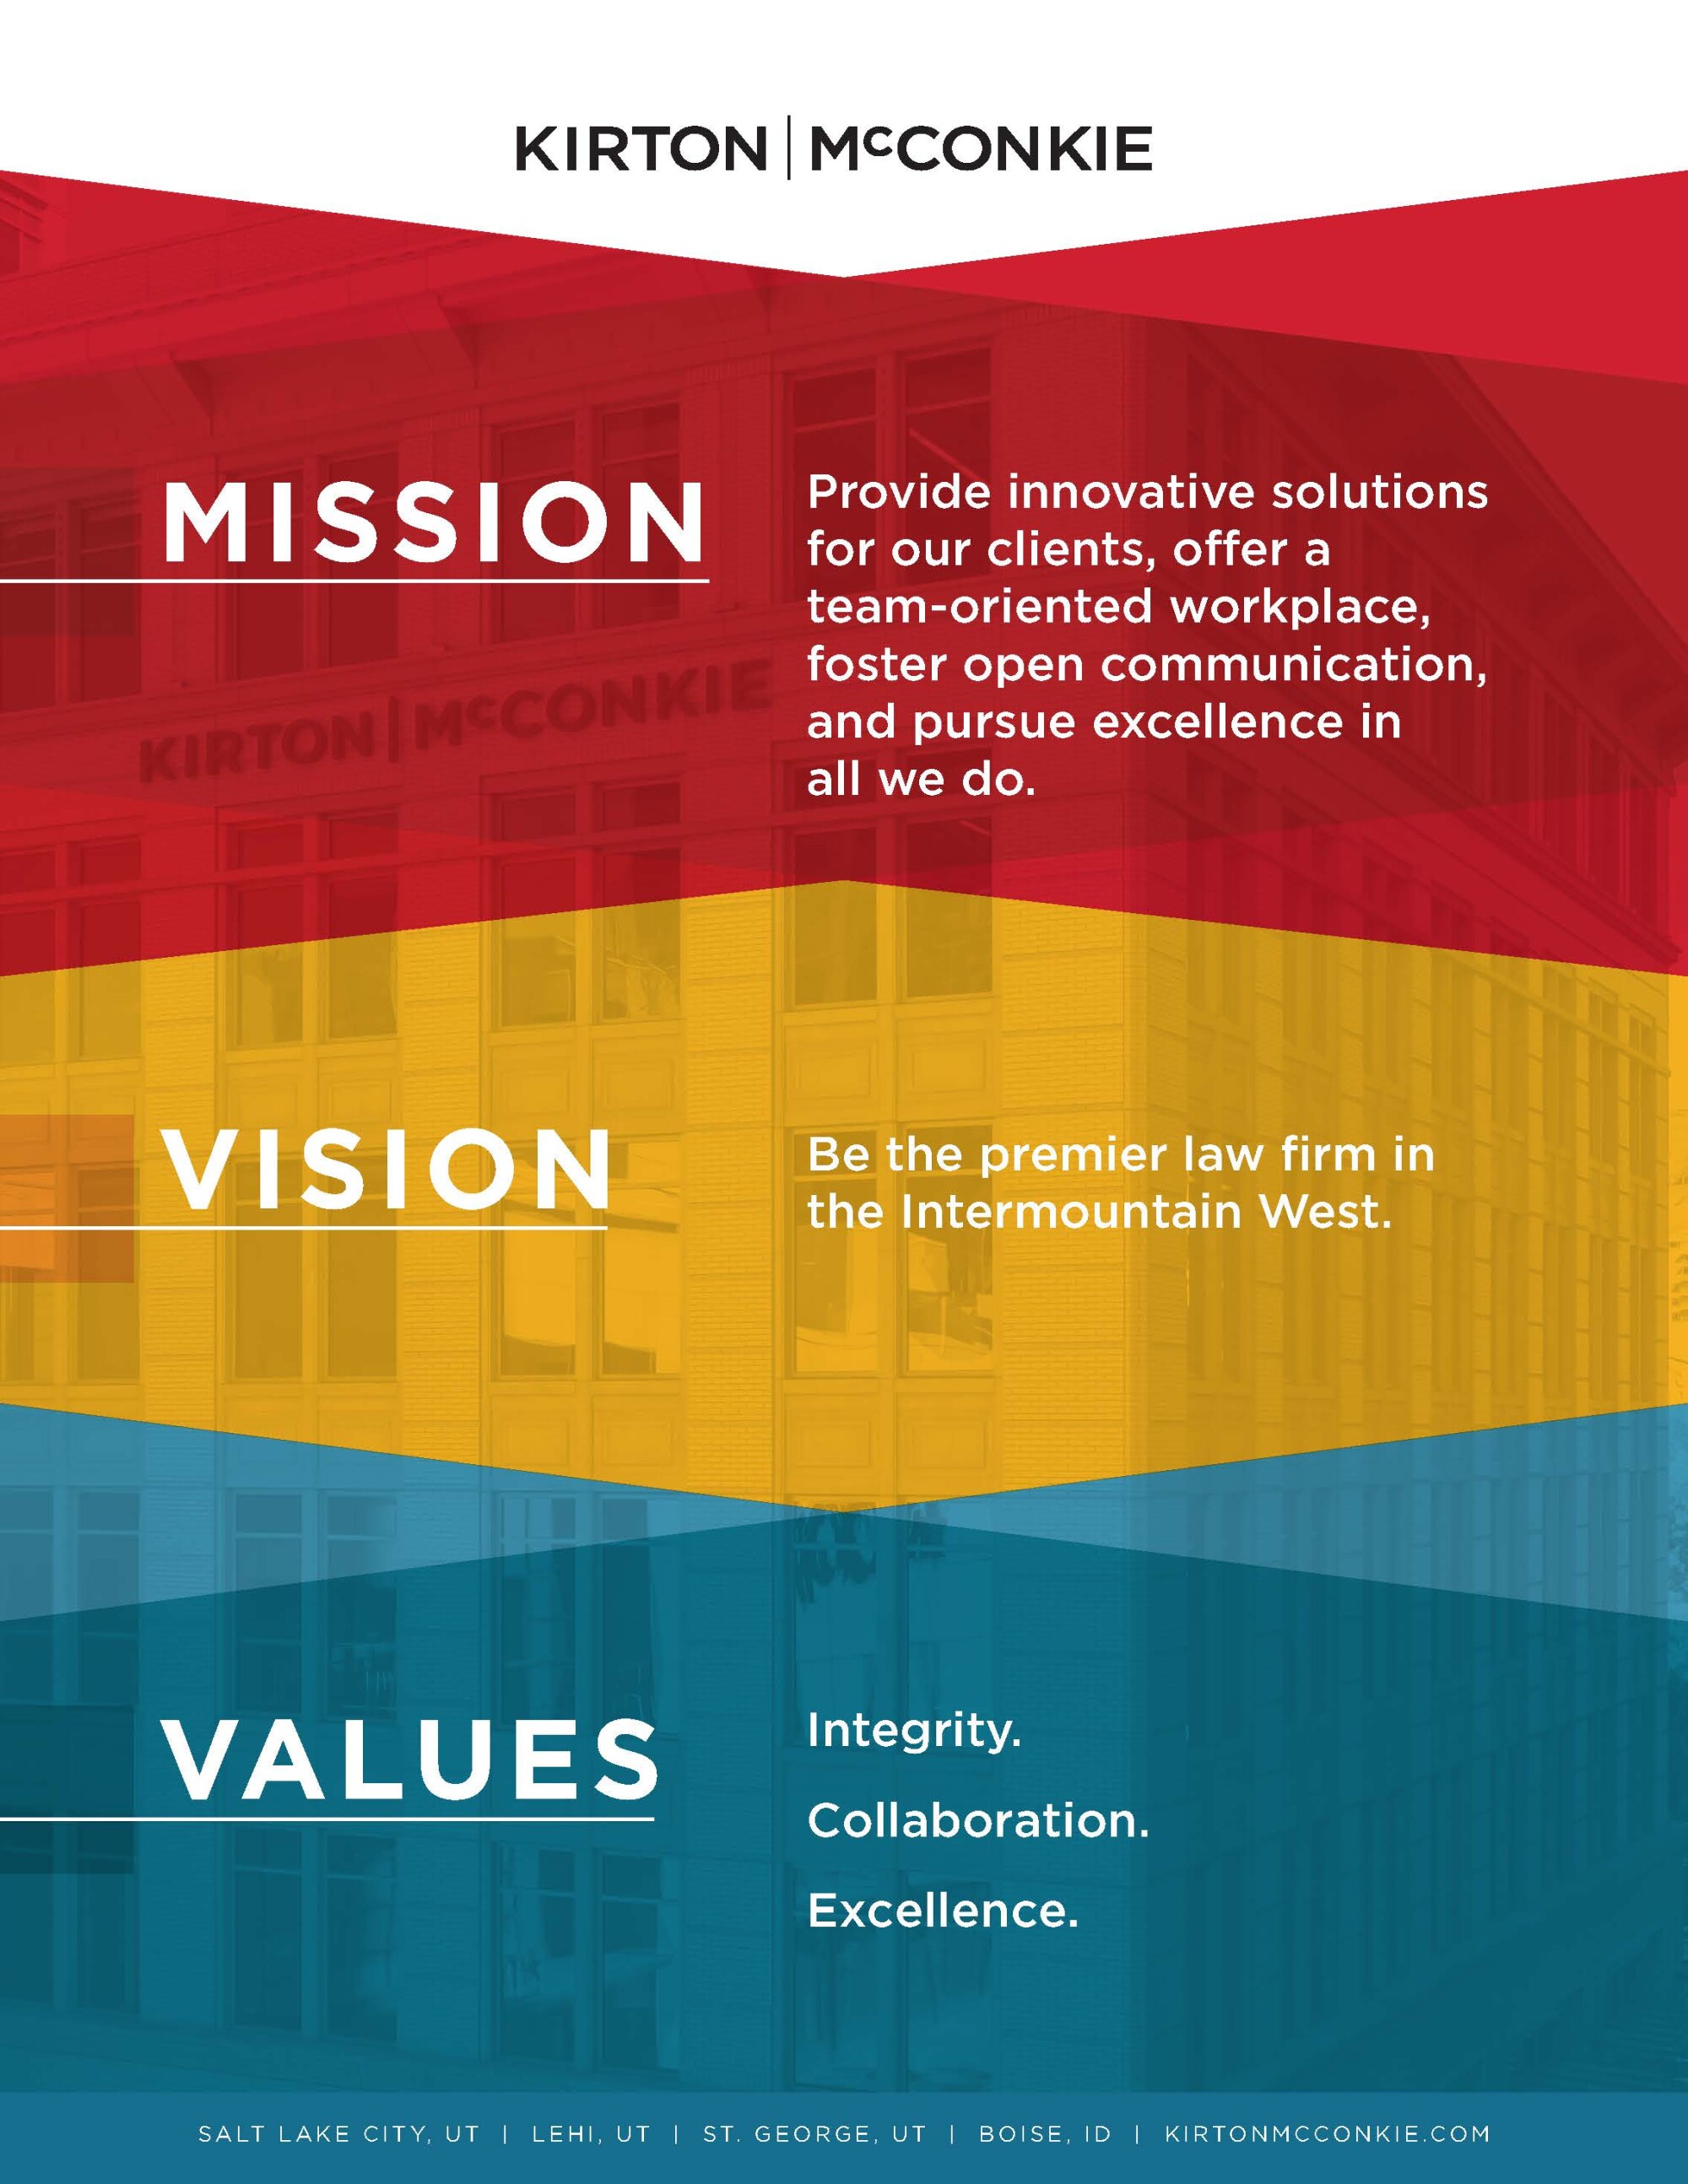 KM Mission, Vision, Values